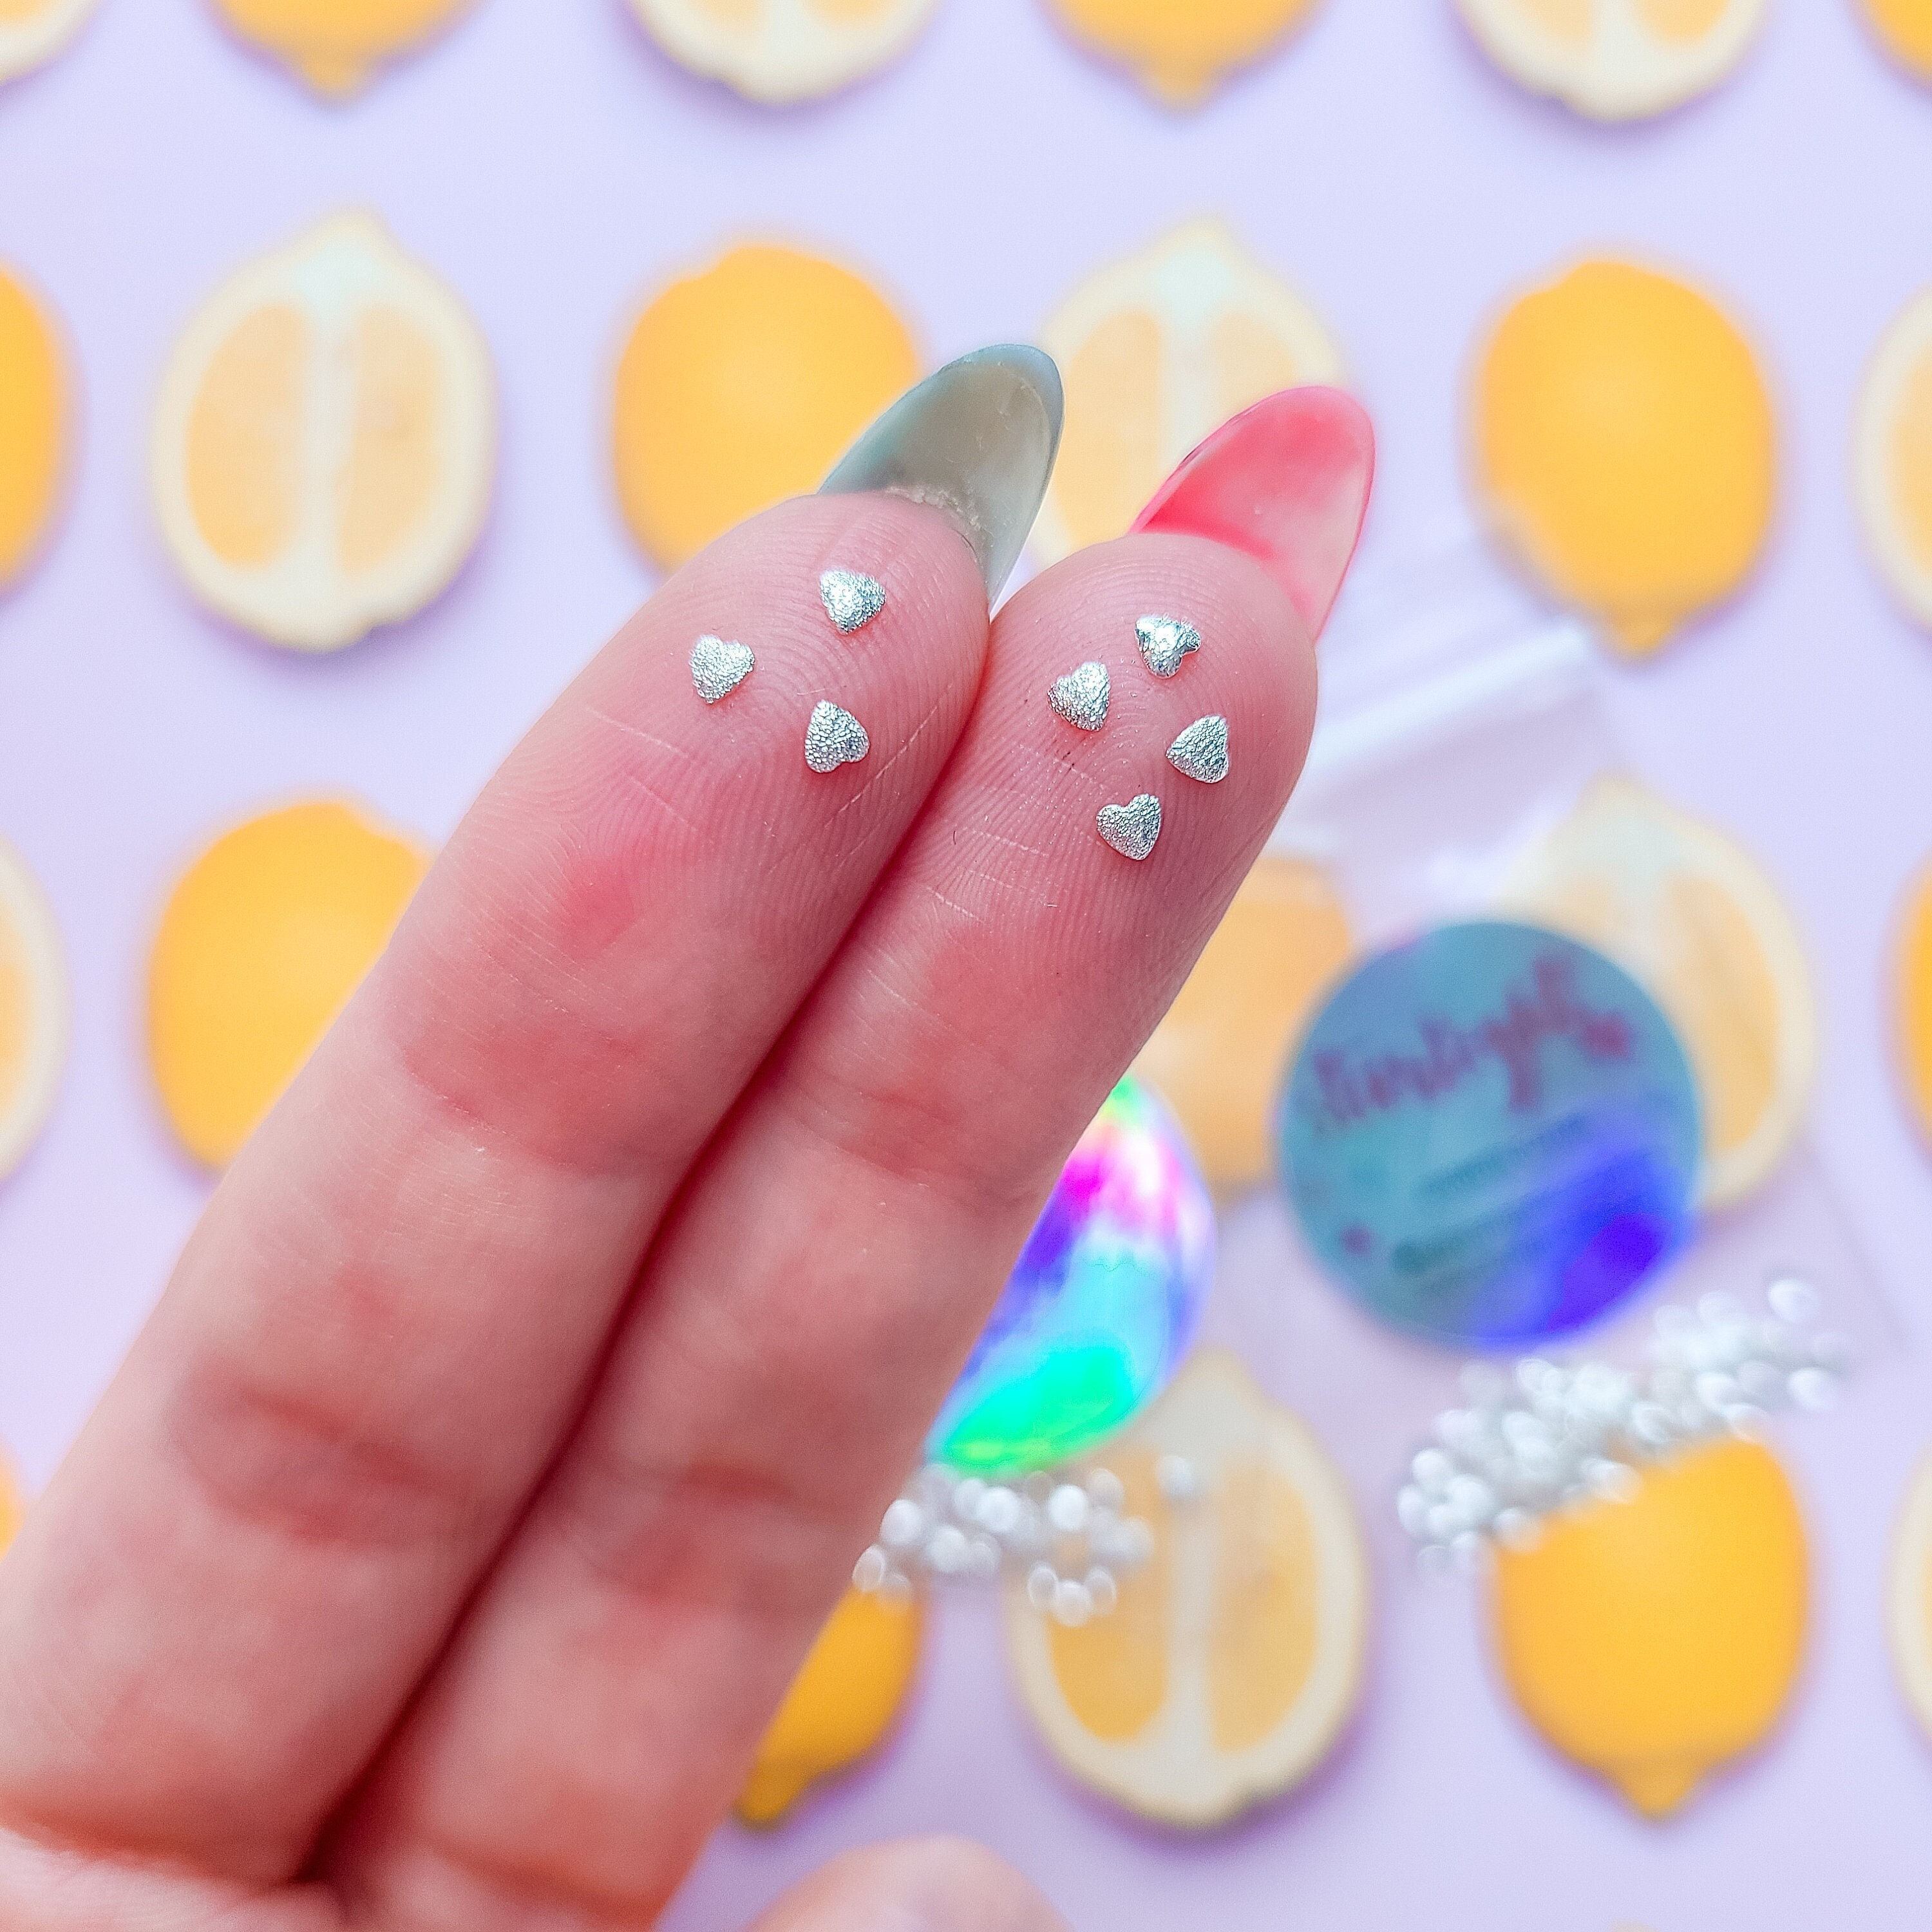 Minejin Nail Art Mini Rhinestones Micro Crystals Sharp Bead Phone Mini Gems DIY Art Decoration Need Glue 1400pcs (AB Color)